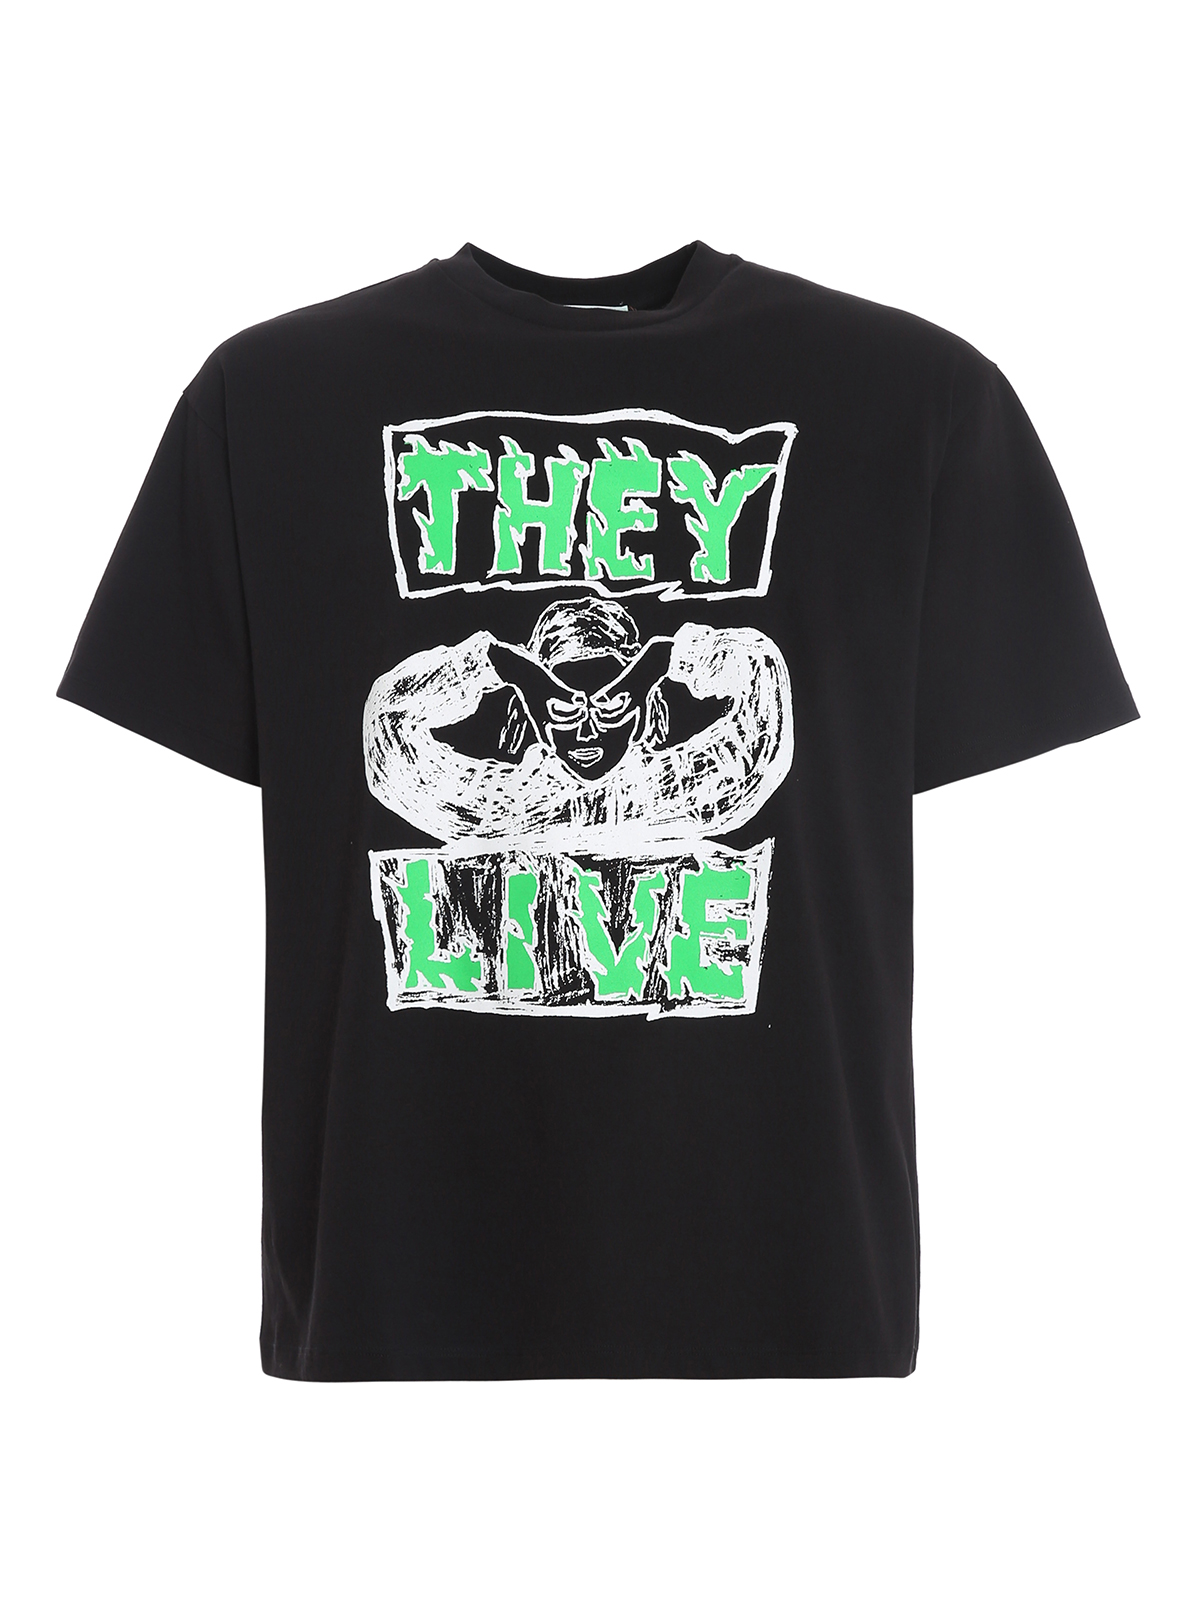 T-shirts Aries - They Live T-shirt - SRAR60006BLACK | Shop online at iKRIX